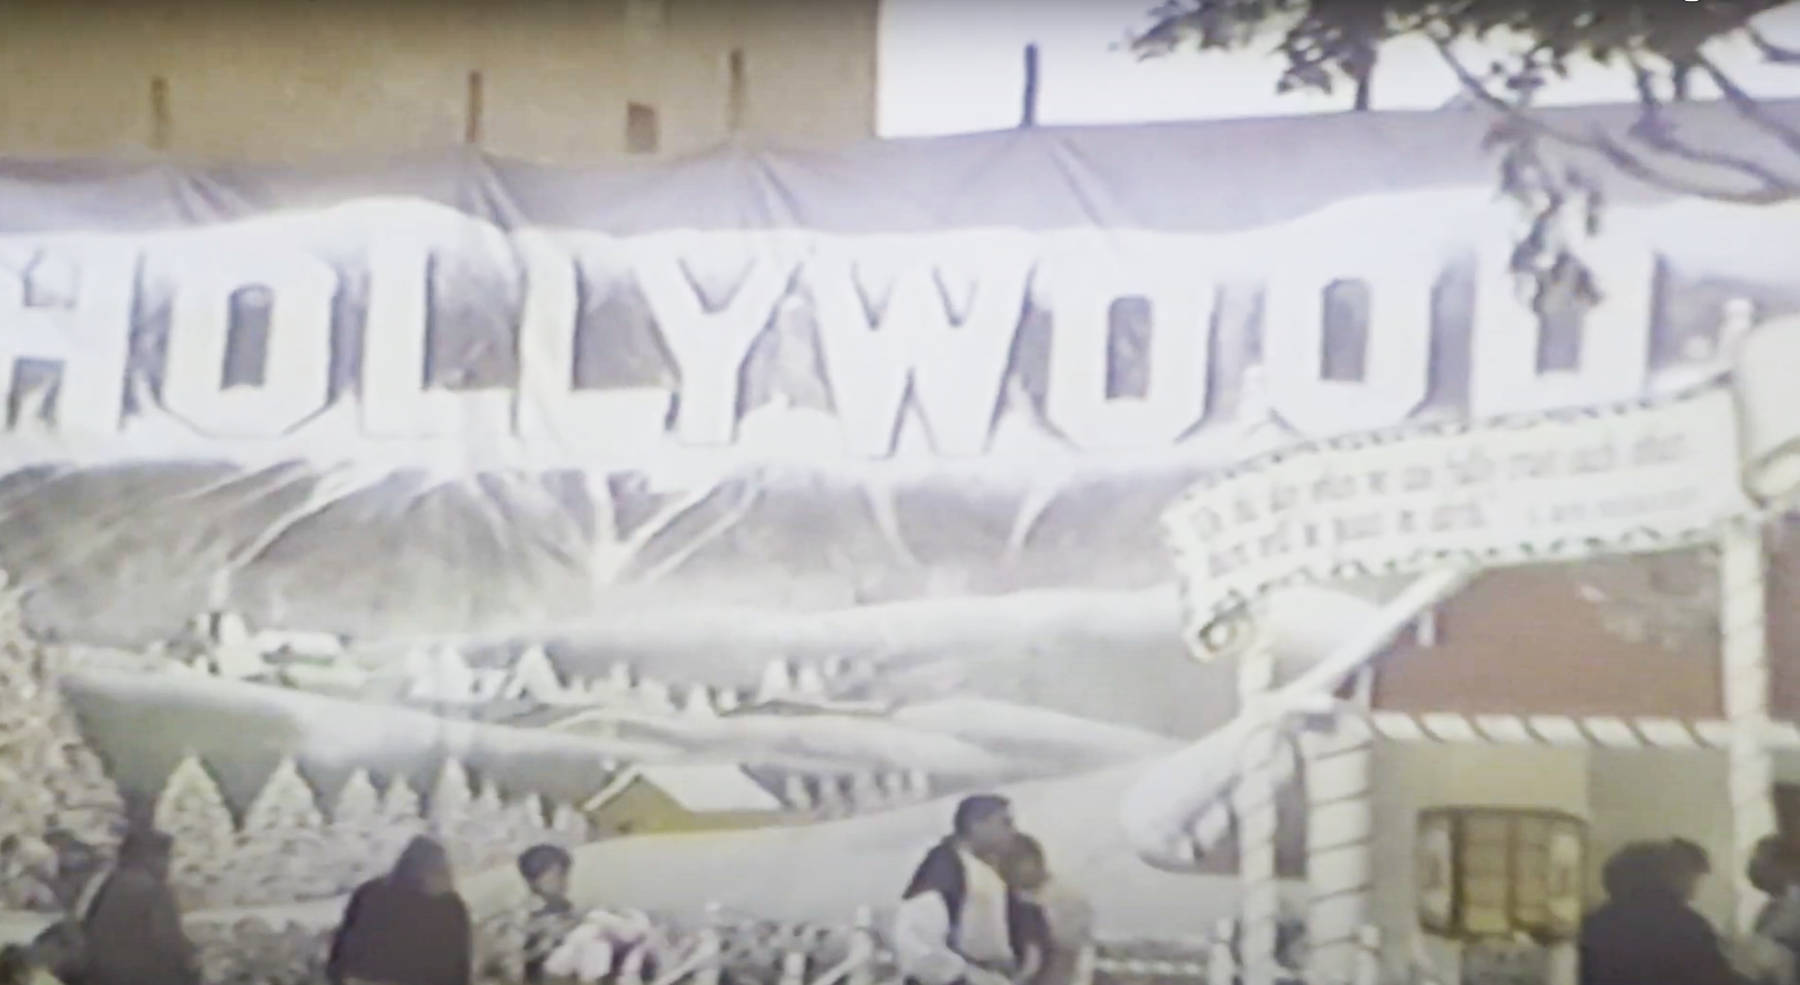 Styrofoam Snow on Hollywood Boulevard